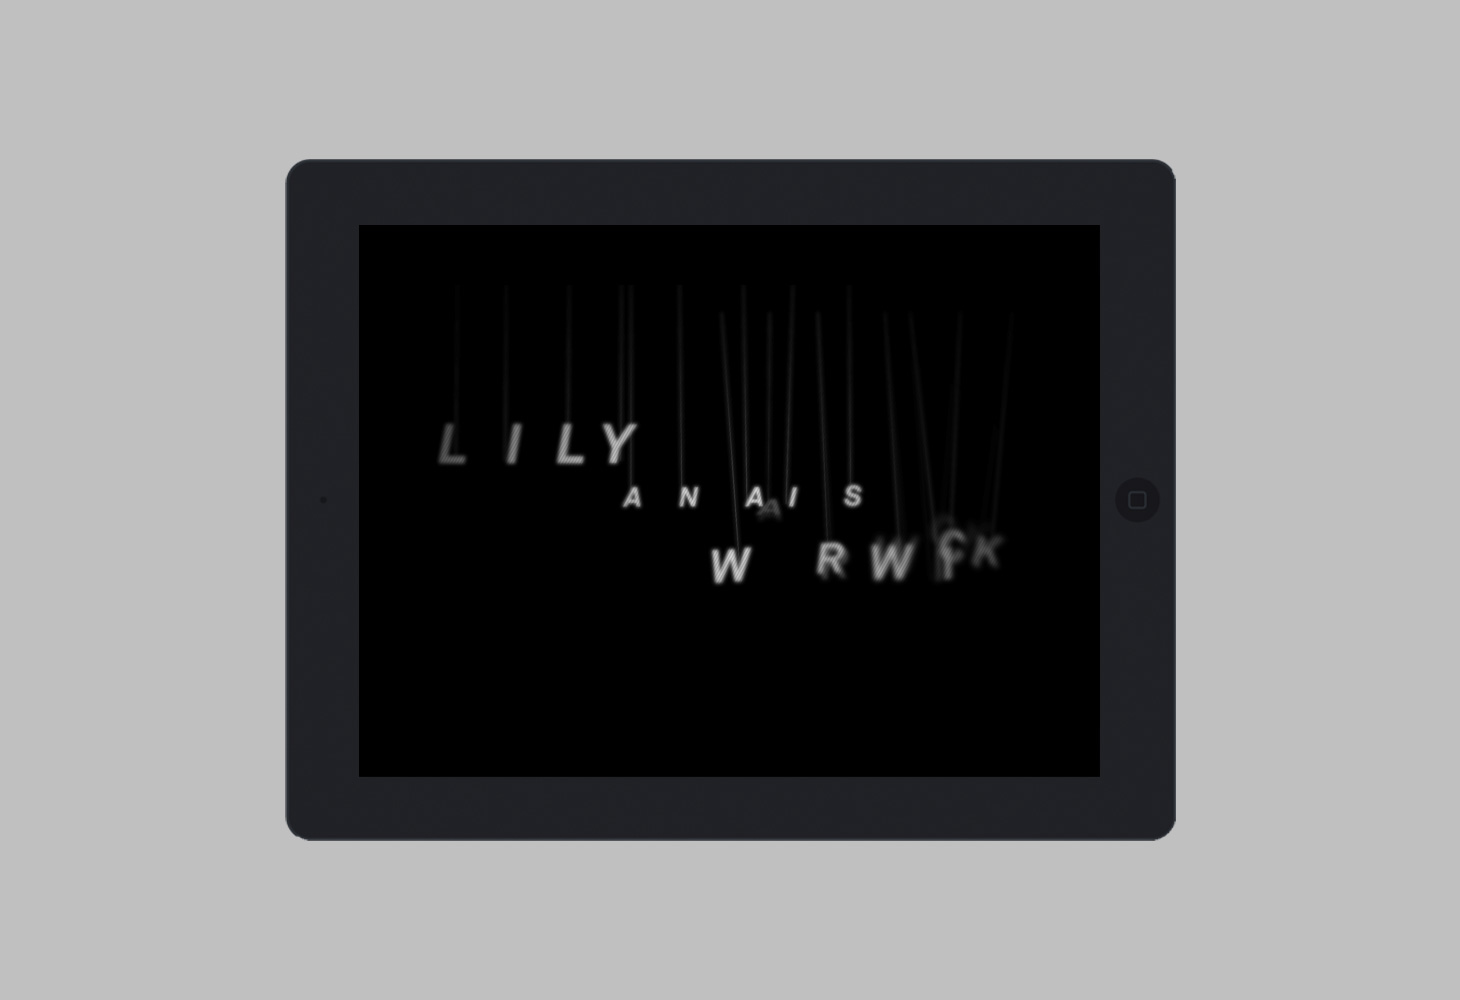 Lilbags - Title - LILY ANAIS WARWICK